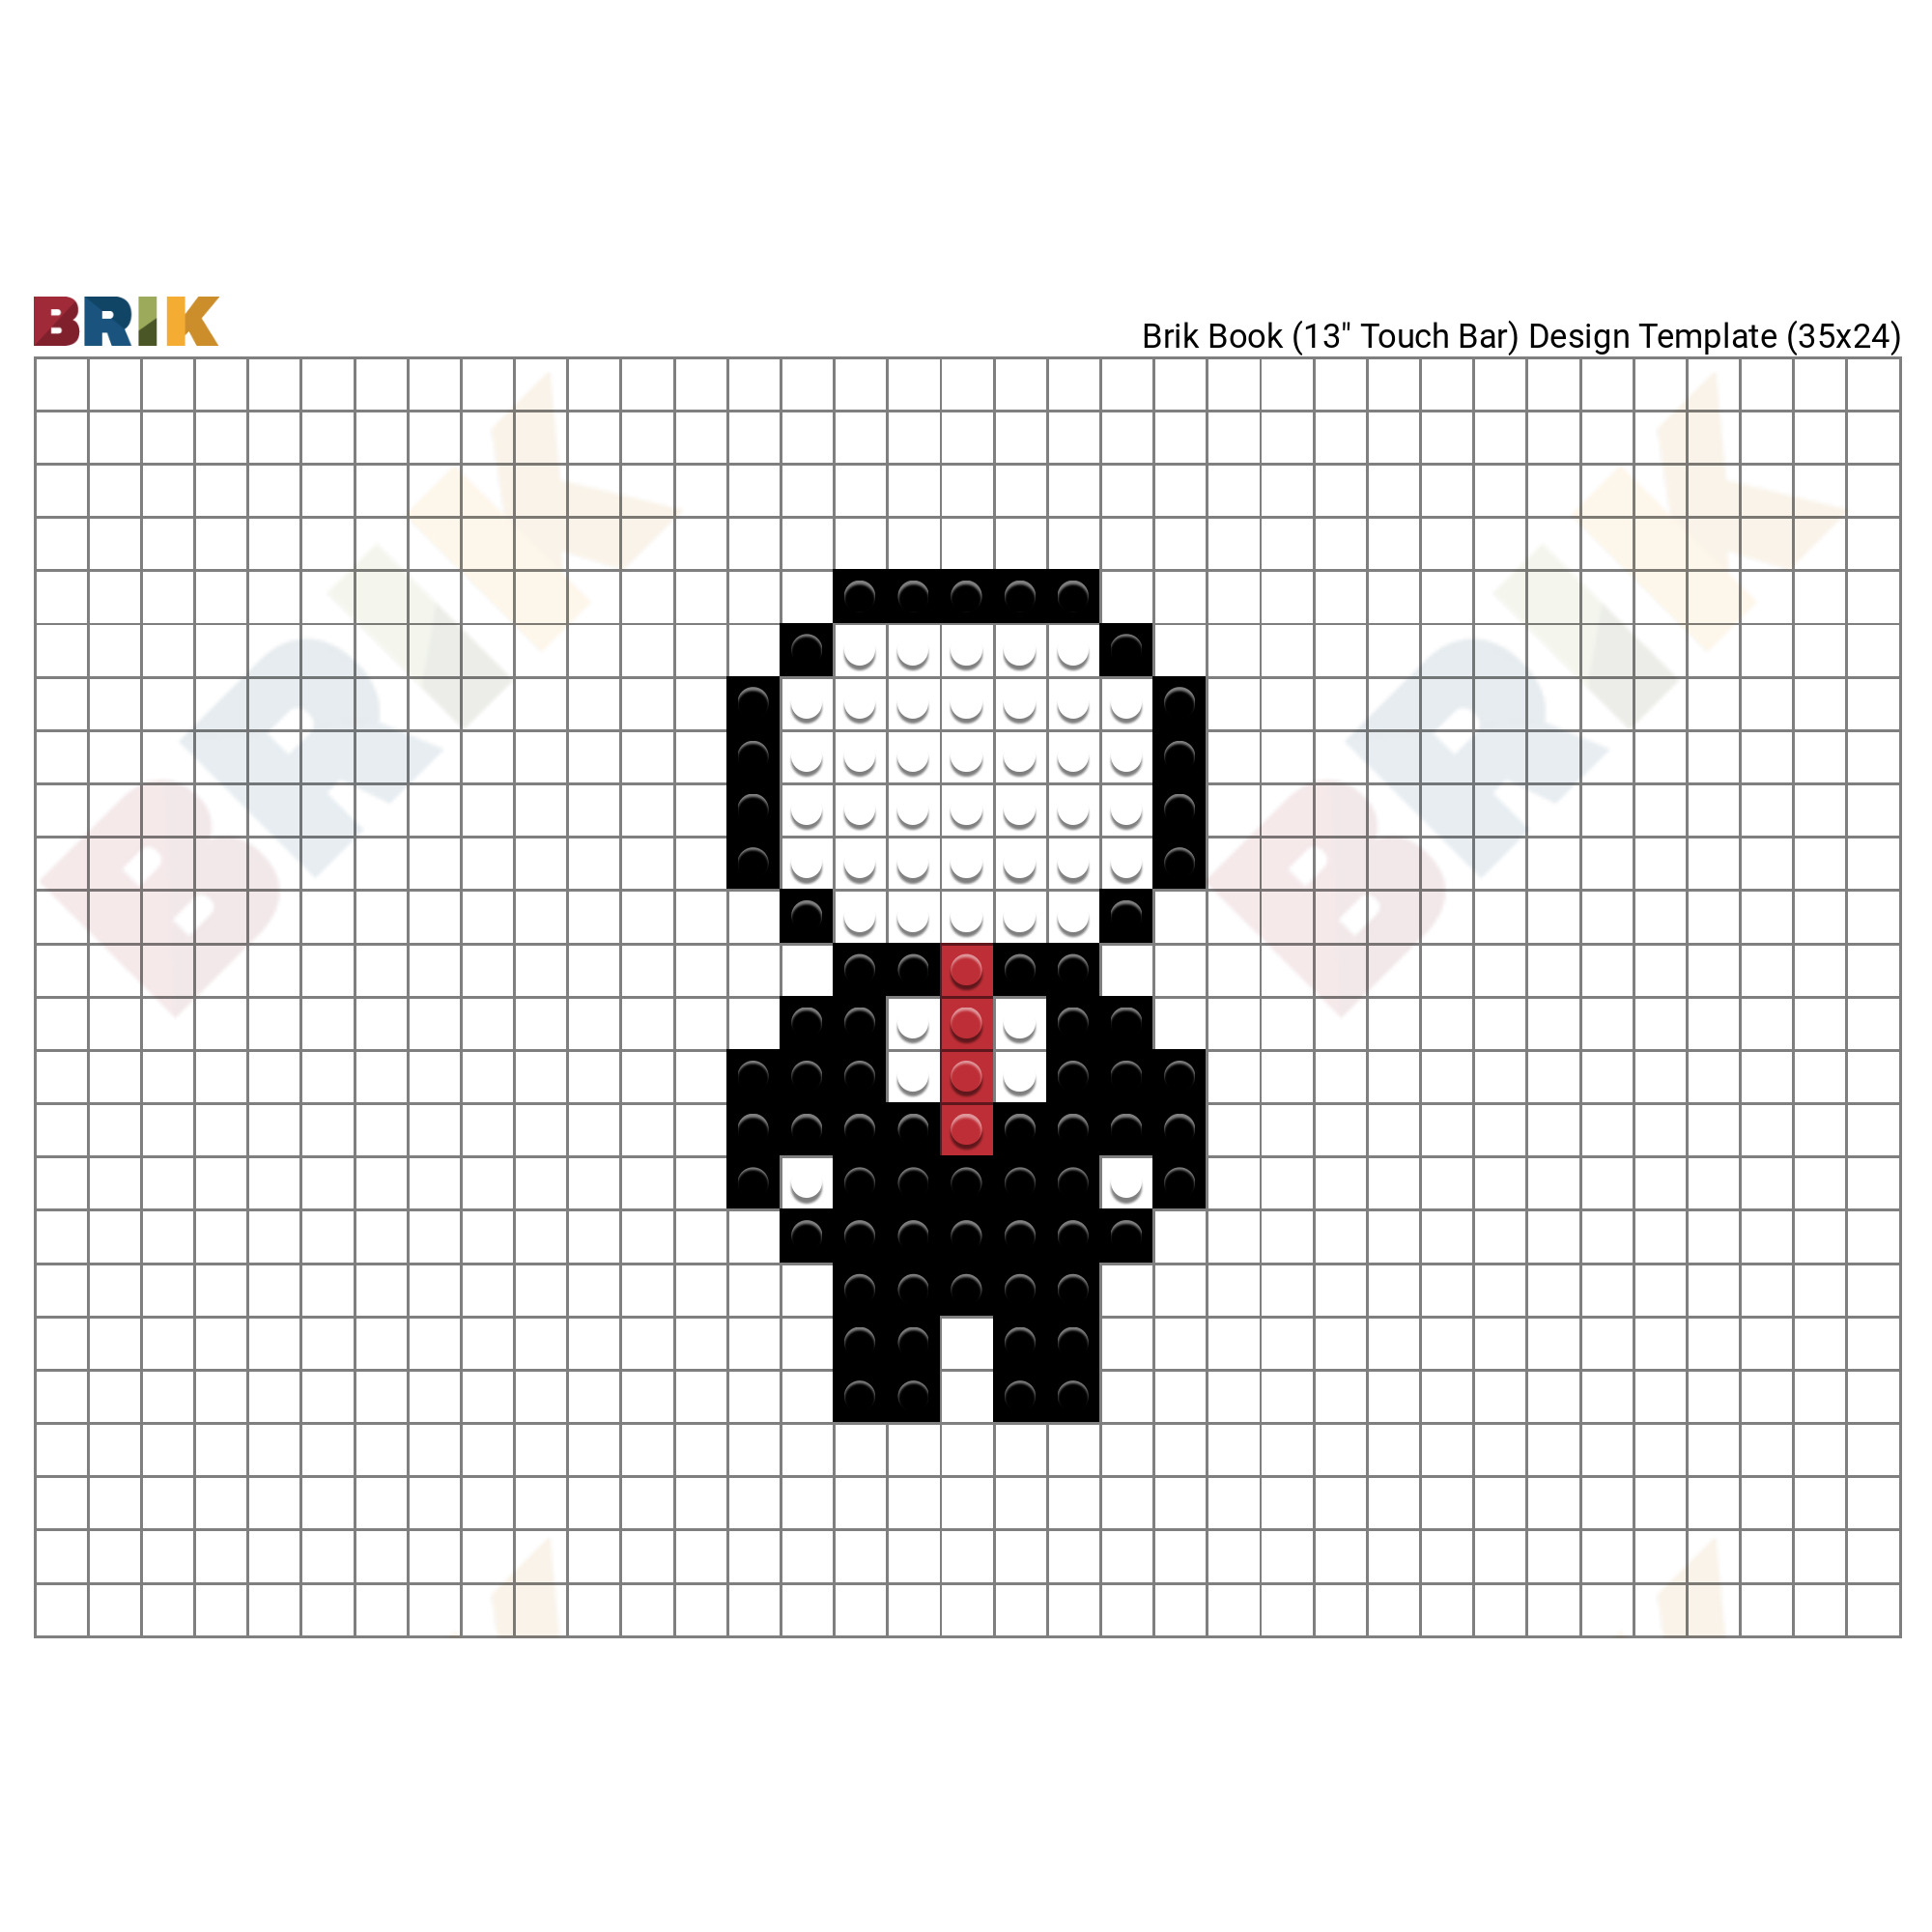 slender man pixel art minecraft